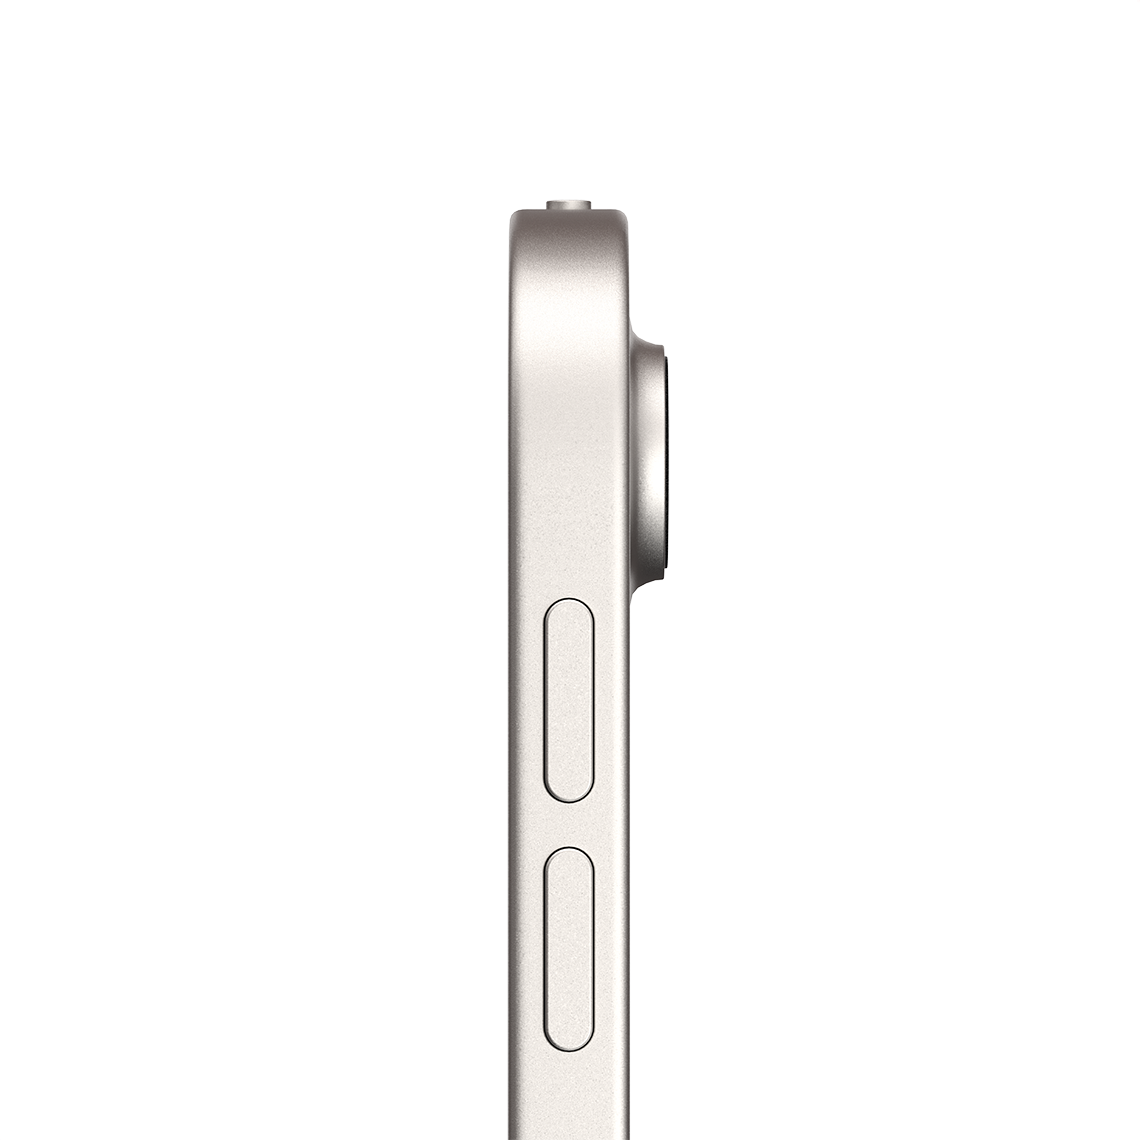 Apple iPad Air 10.9-inch 5th Generation - Starlight - 64GB, Wi-Fi + Cellular, Open Box